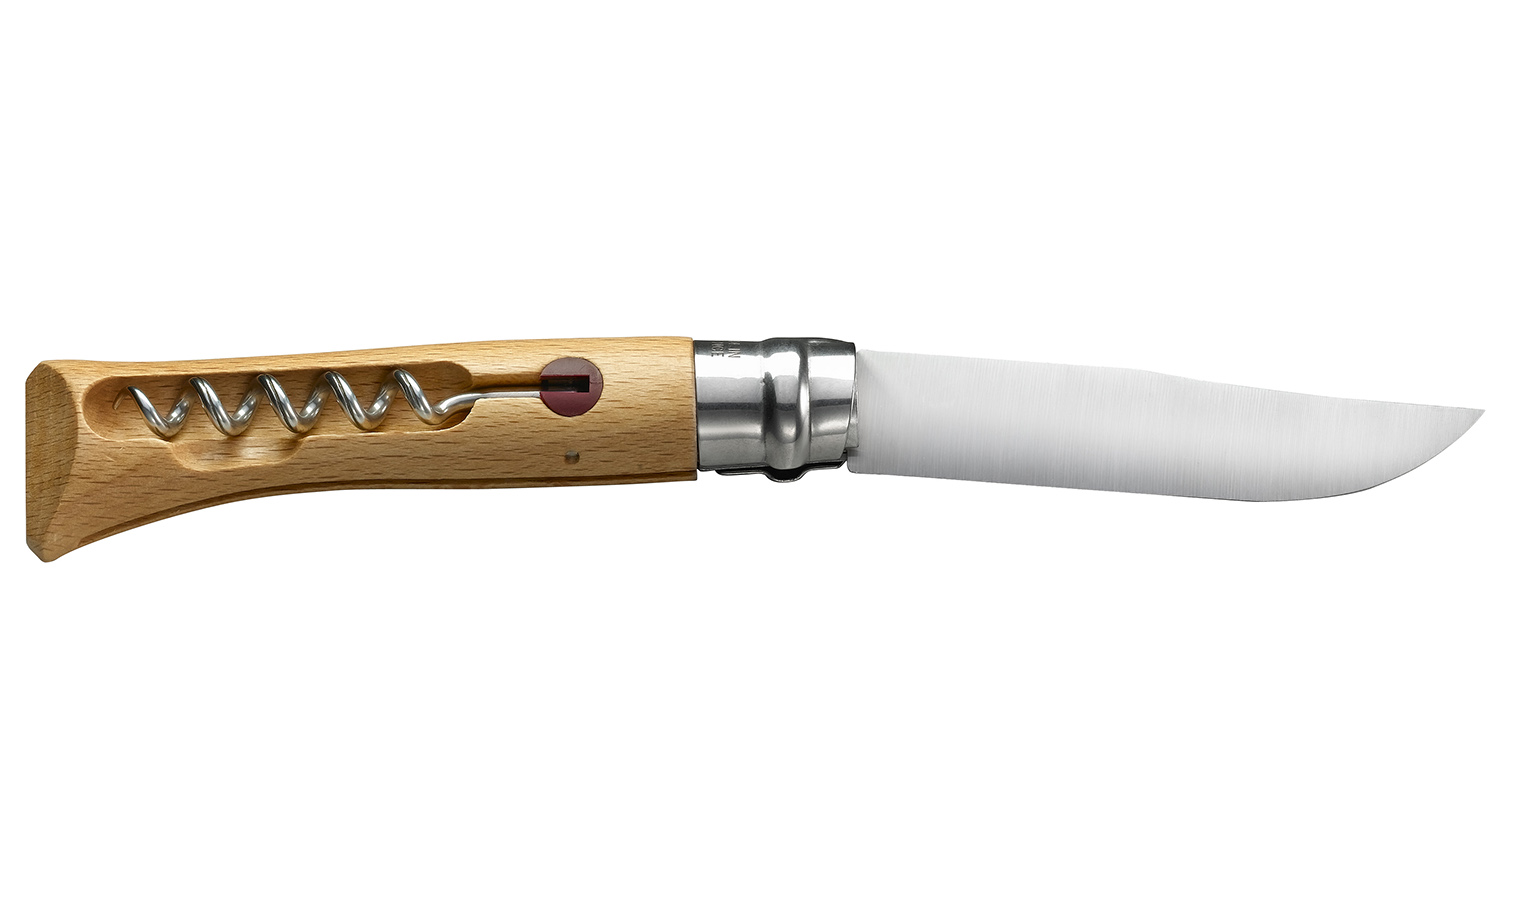 Opinel knife virobloc n.10 stainless steel mm.100 corkscrew